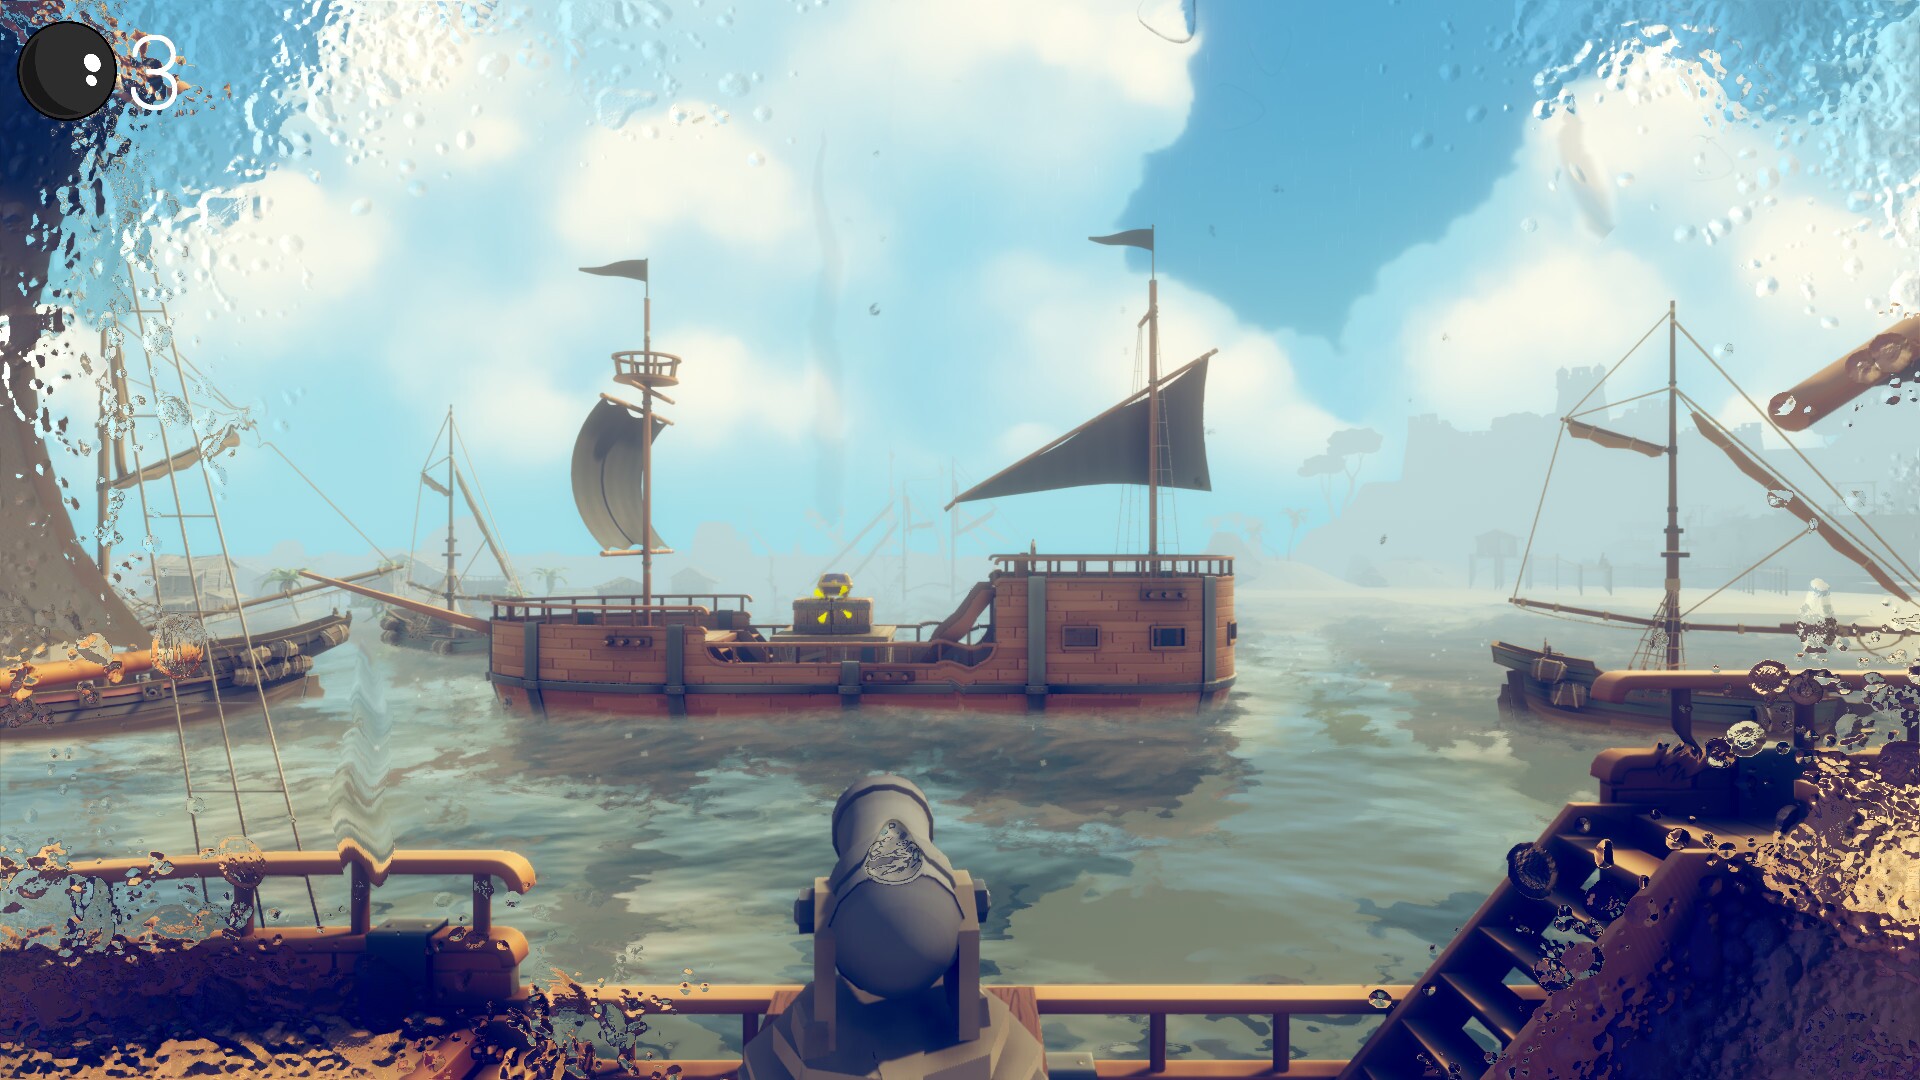 Seven Pirates h. Бесплатная игра про пиратов в стиме